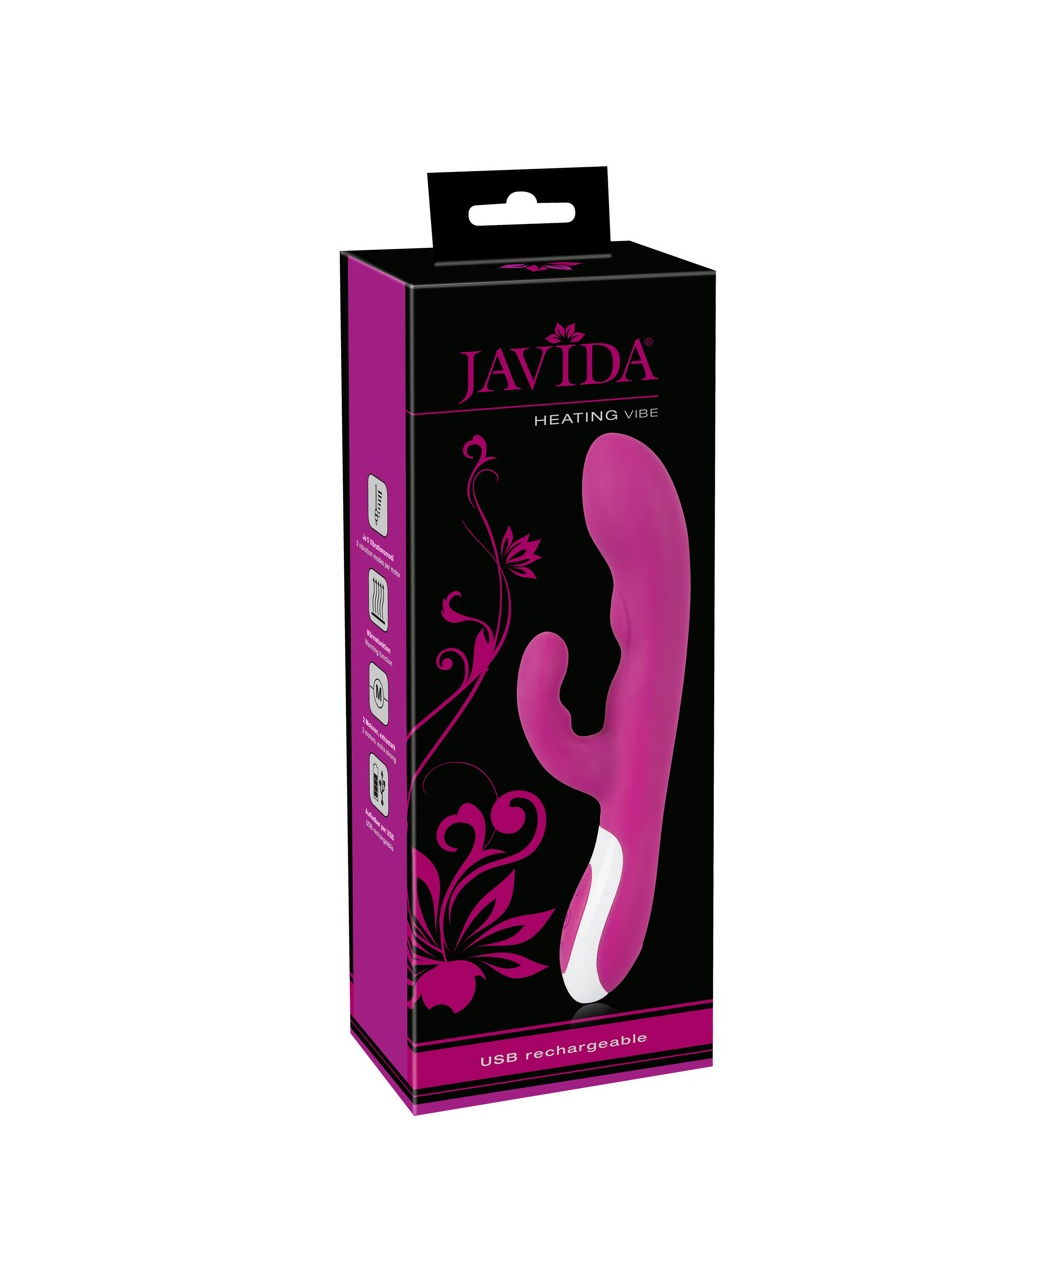 Javida Heating vibrators